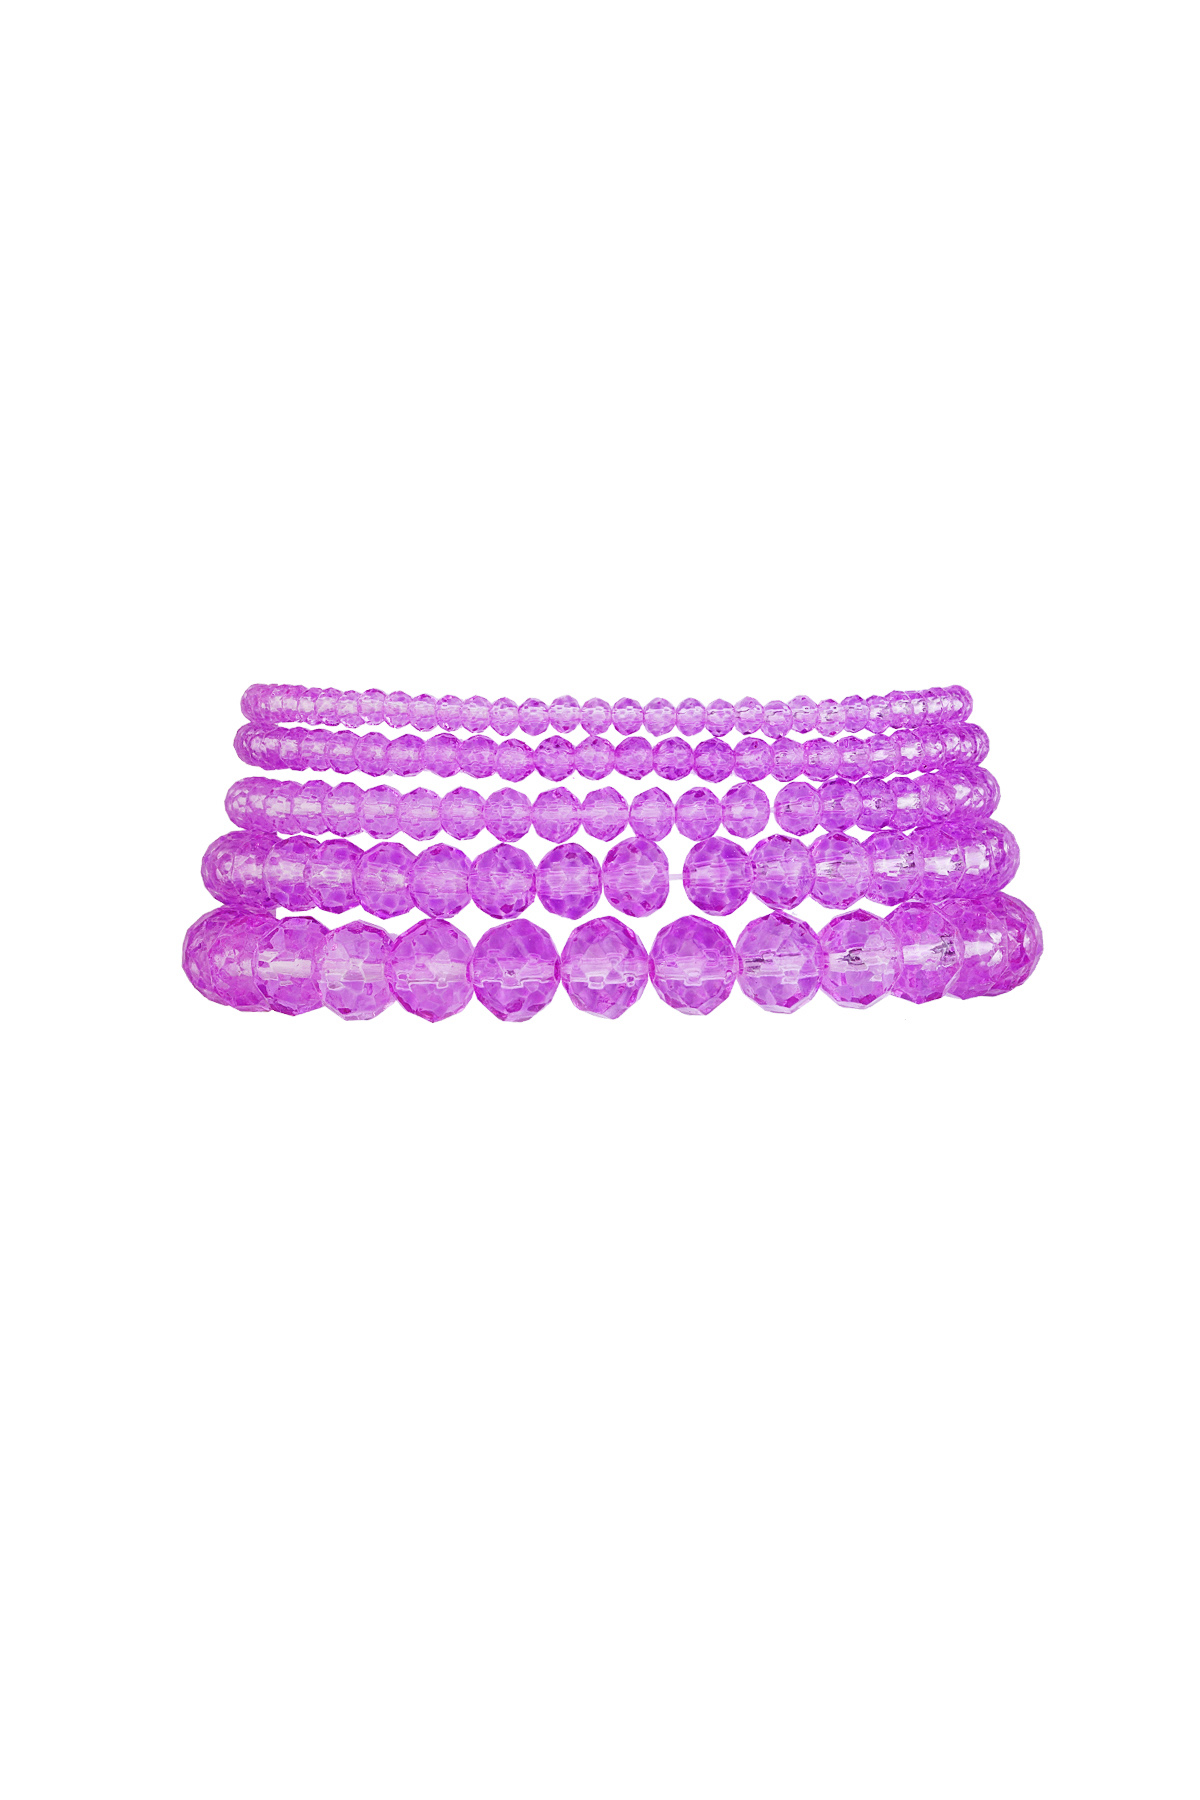 Set van 5 kristal armbanden paars - lila